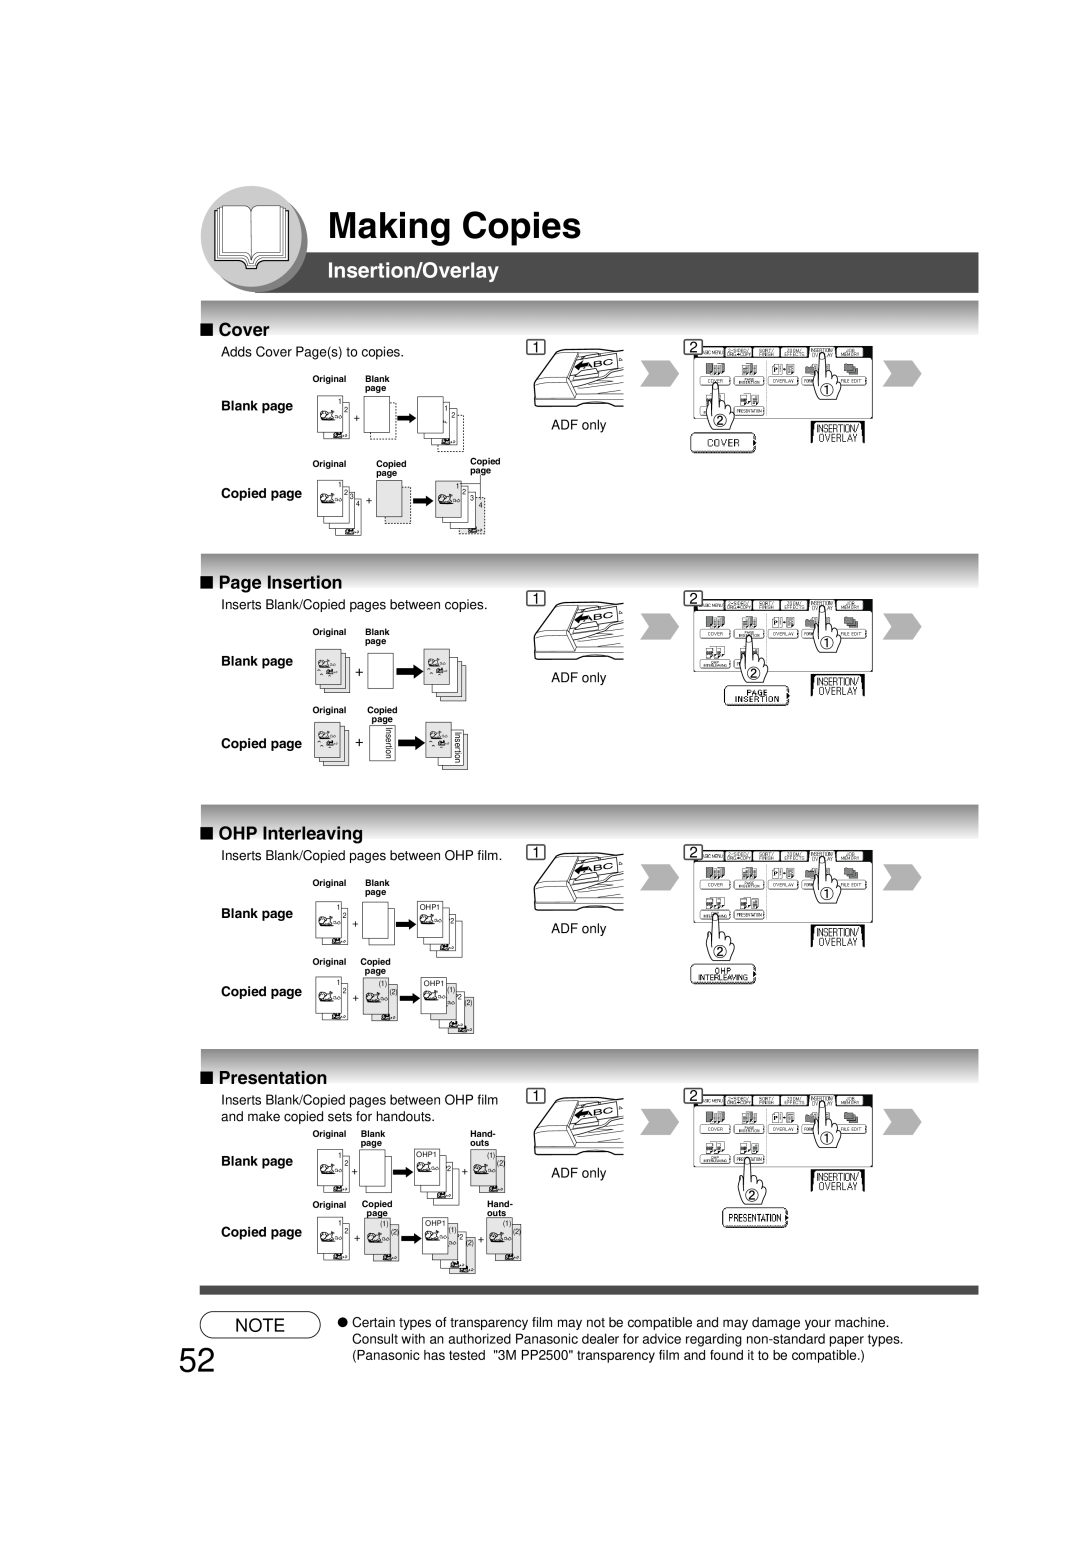 Panasonic 4520 Insertion/Overlay, Cover, Page Insertion, OHP Interleaving, Presentation, Making Copies, Original, Blank 